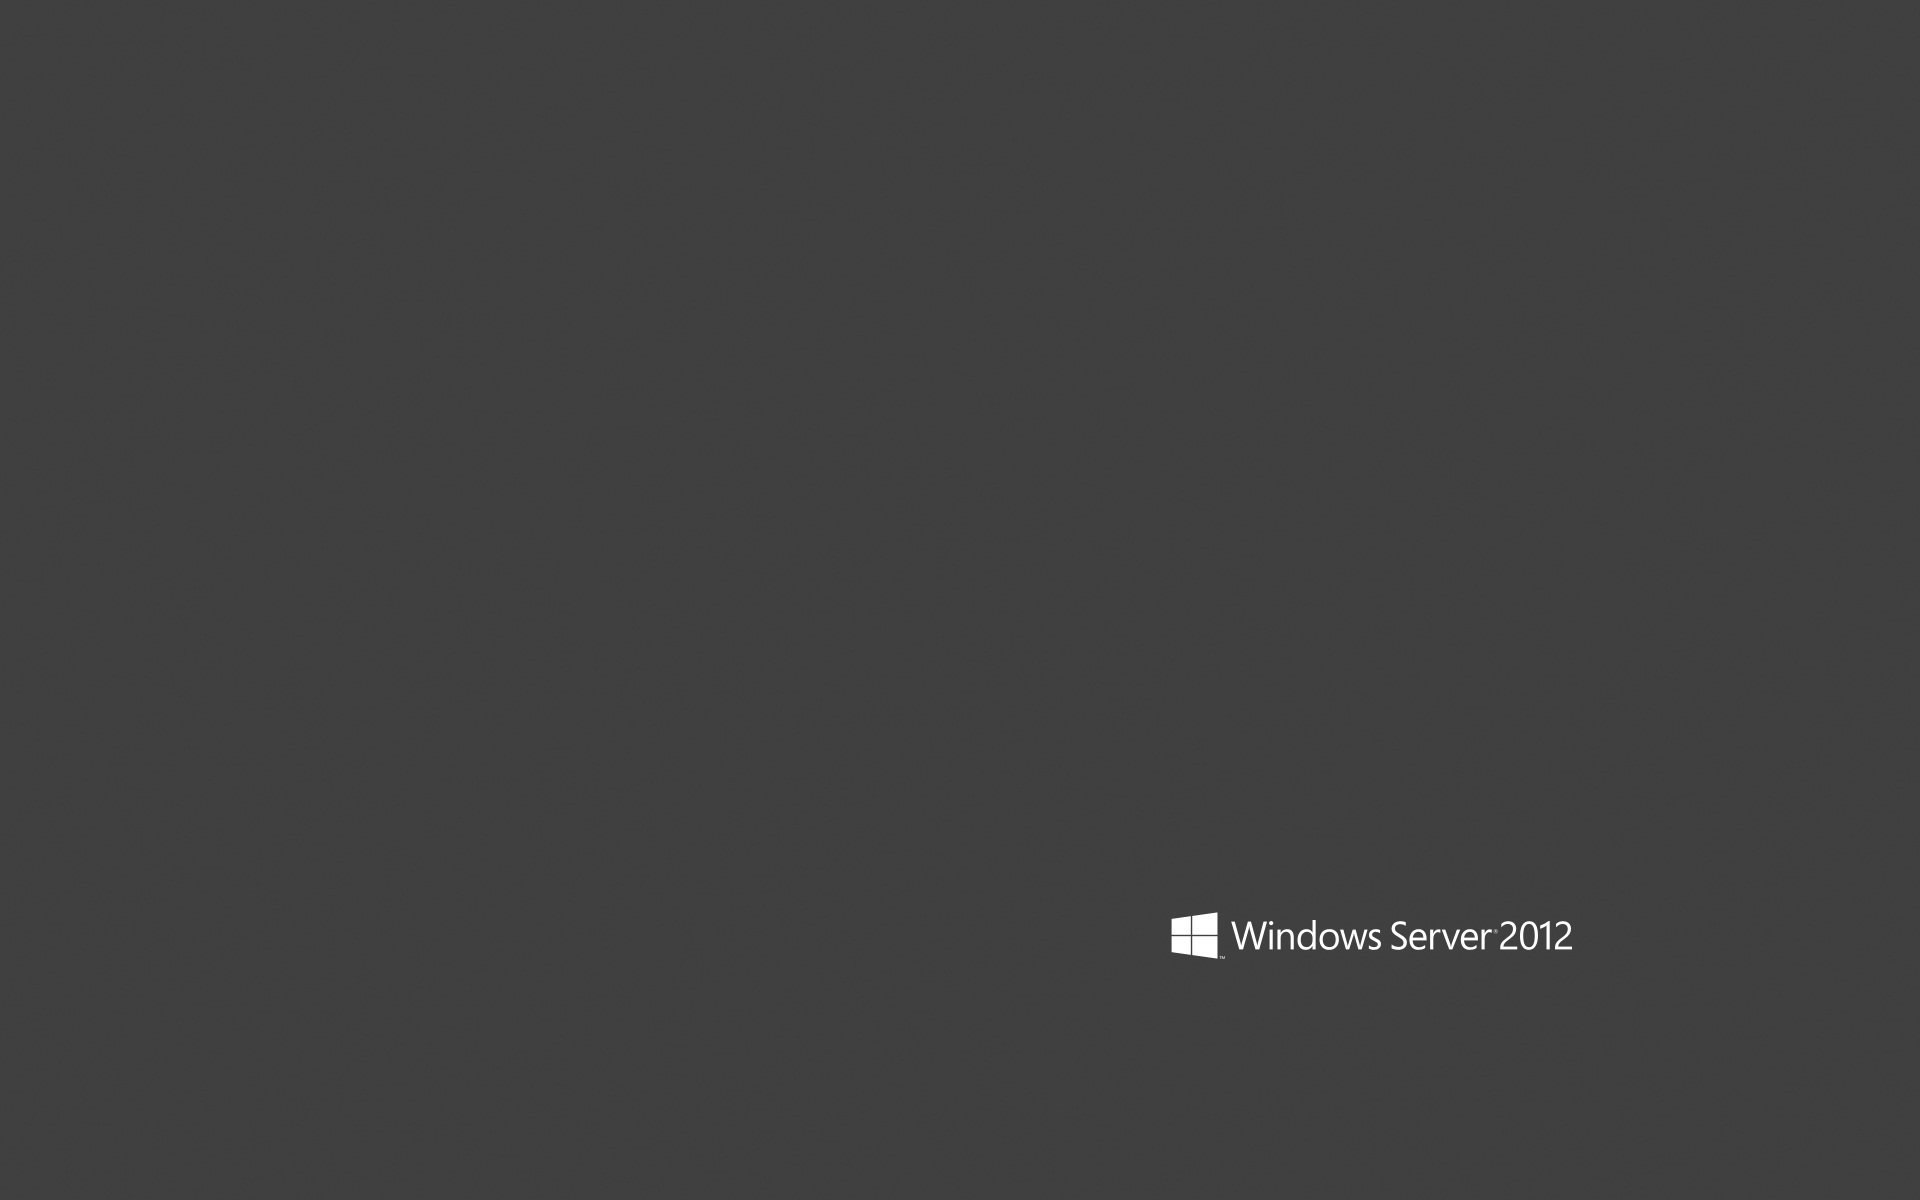 Windows Server 2012 Default Wallpaper by alexstrand7 on